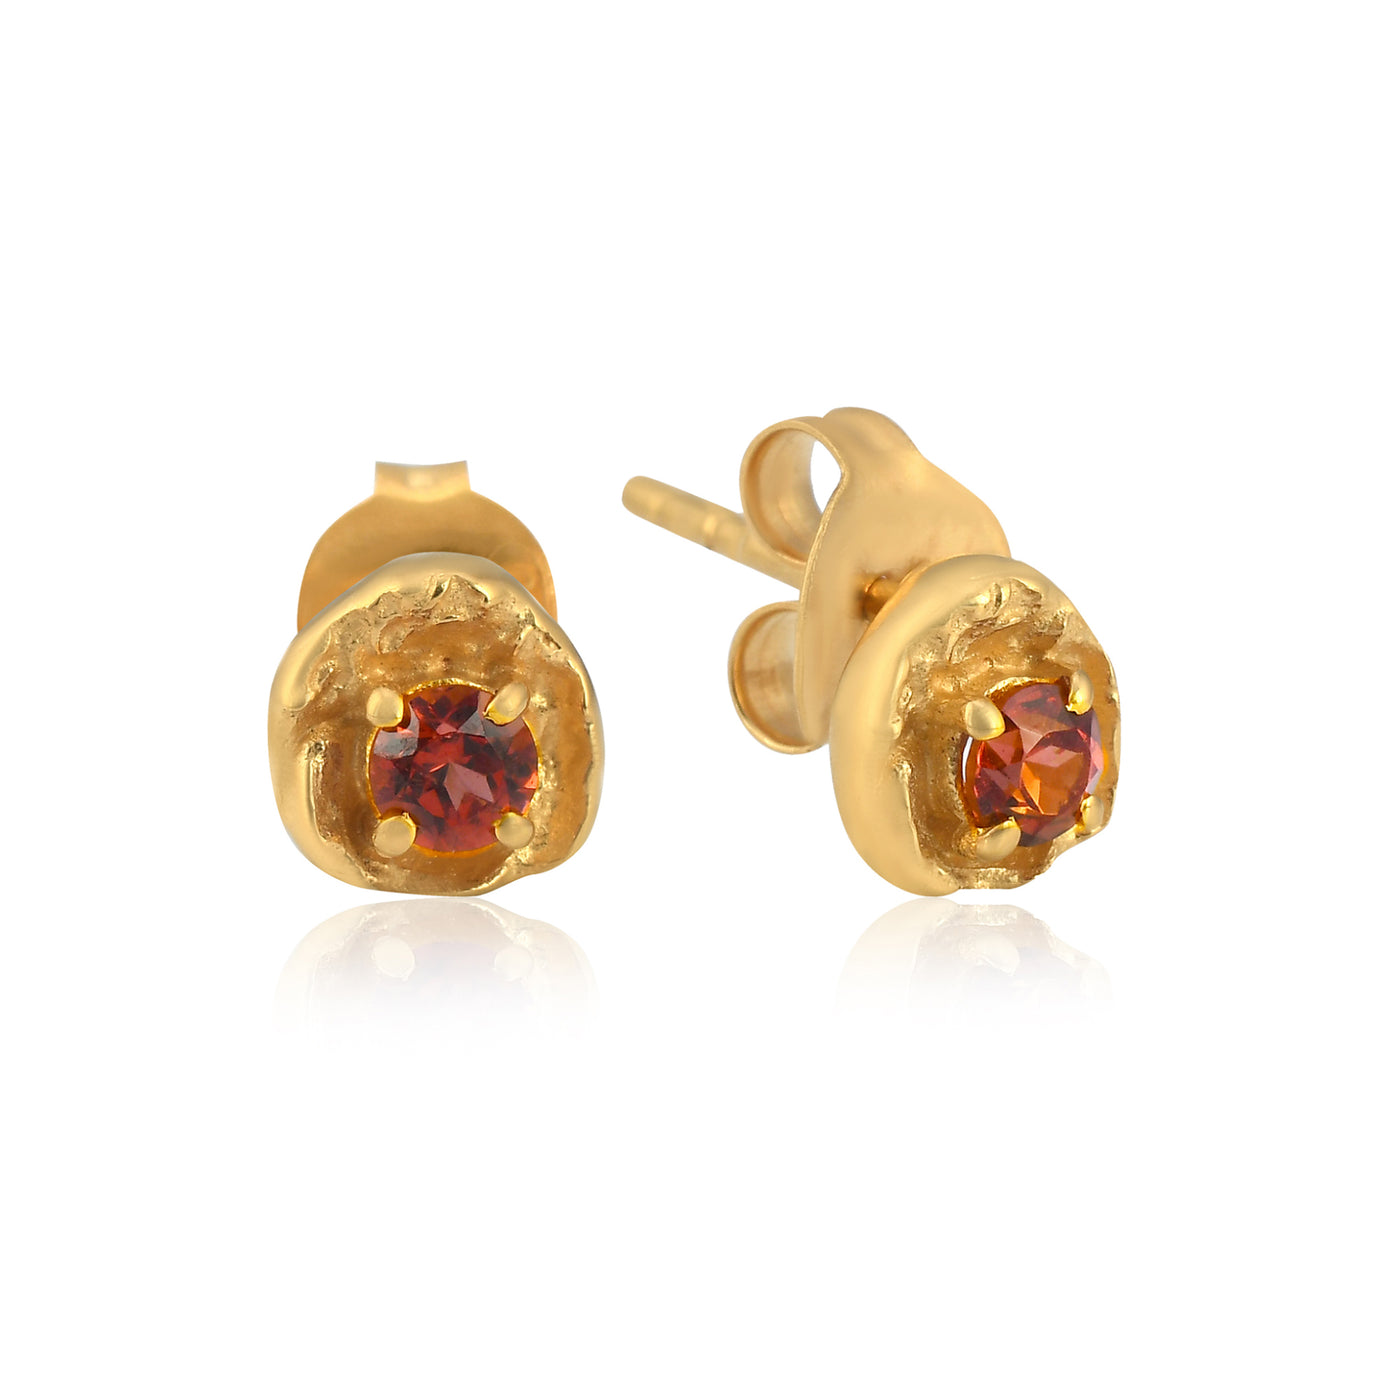 January garnet birthstone organic gold stud earrings, Rani & Co. jewellery